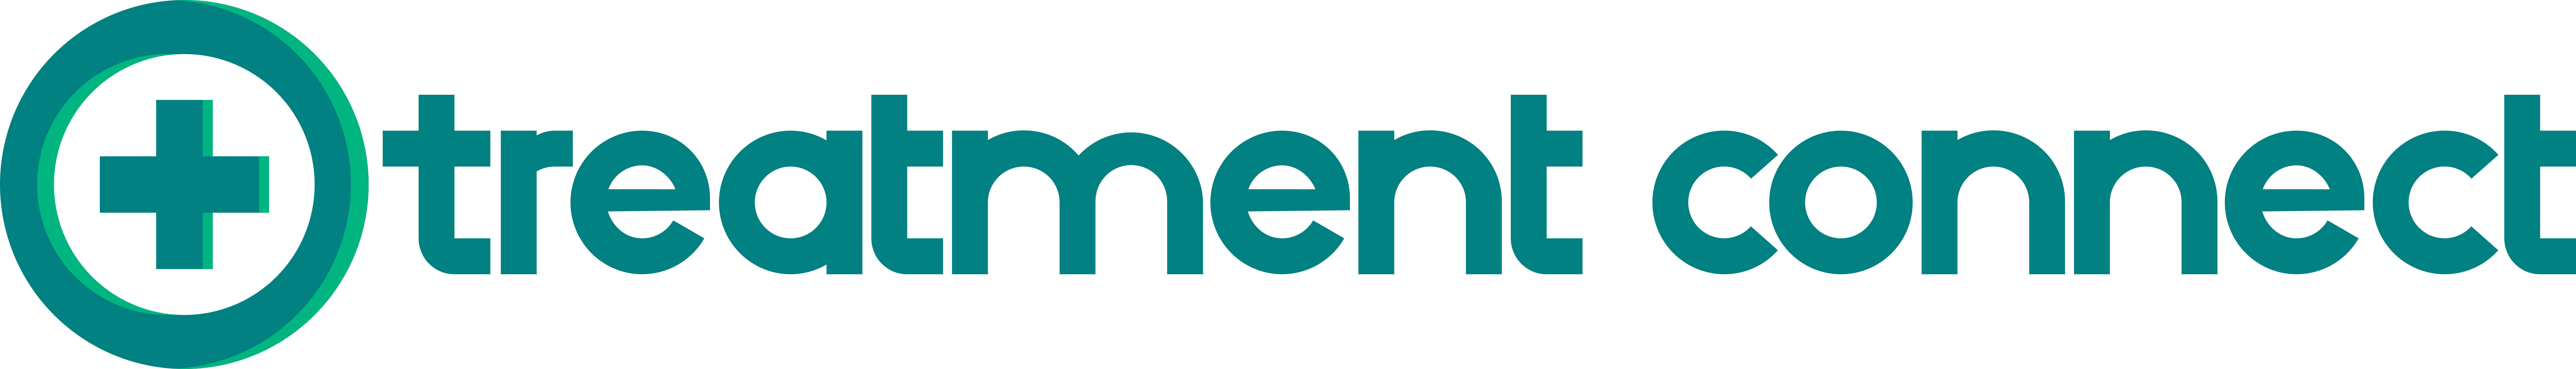 Treatment Connect Logo